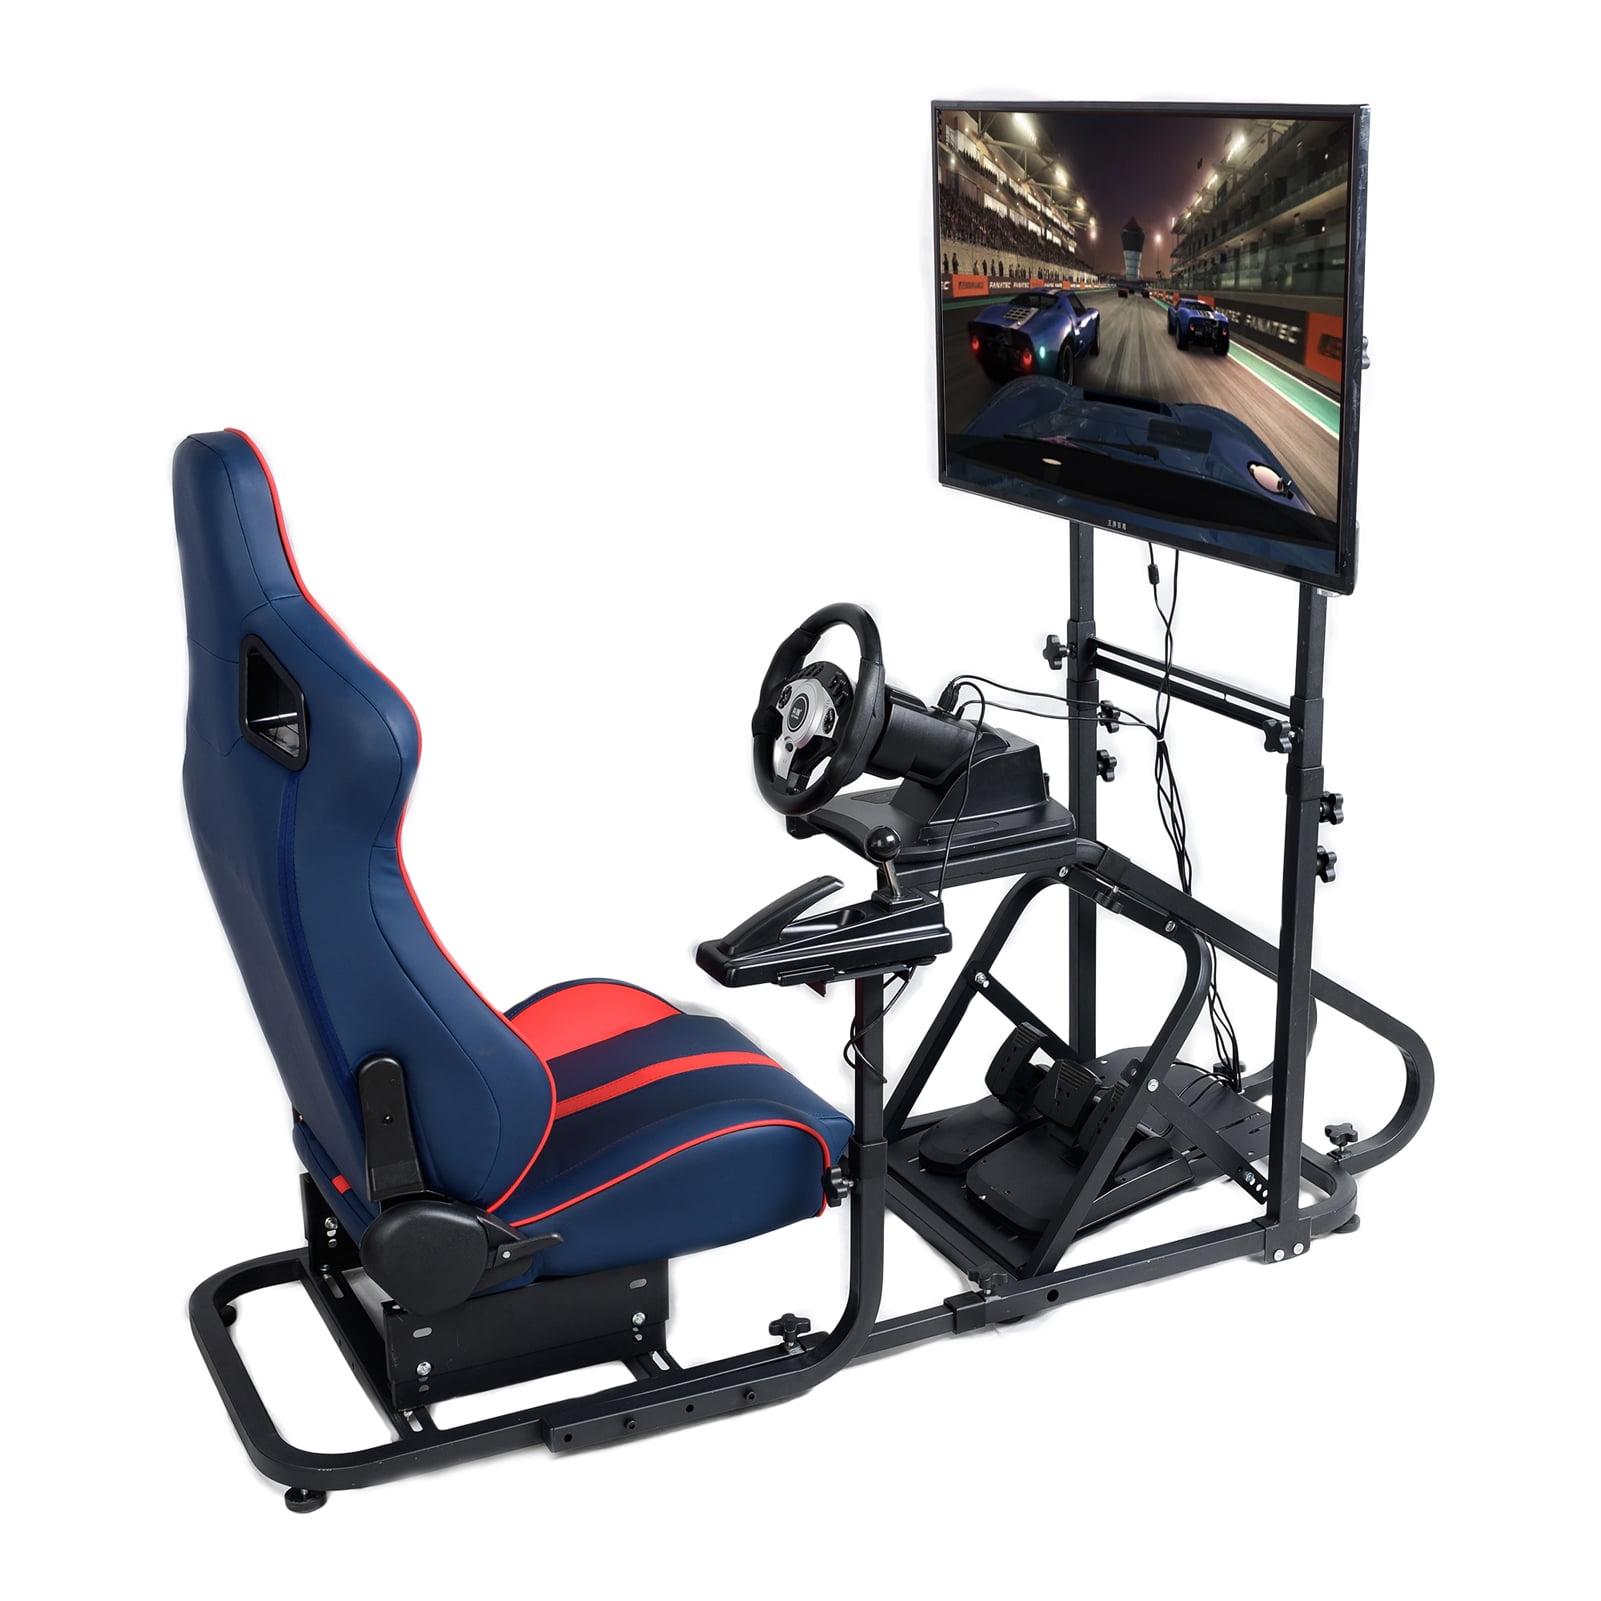 WIILAYOK Racing Wheel Simulator Stand Cockpit, Adjustable Race Simulator  Cockpit for Logitech G25, G27, G29, G920, Thrustmaster